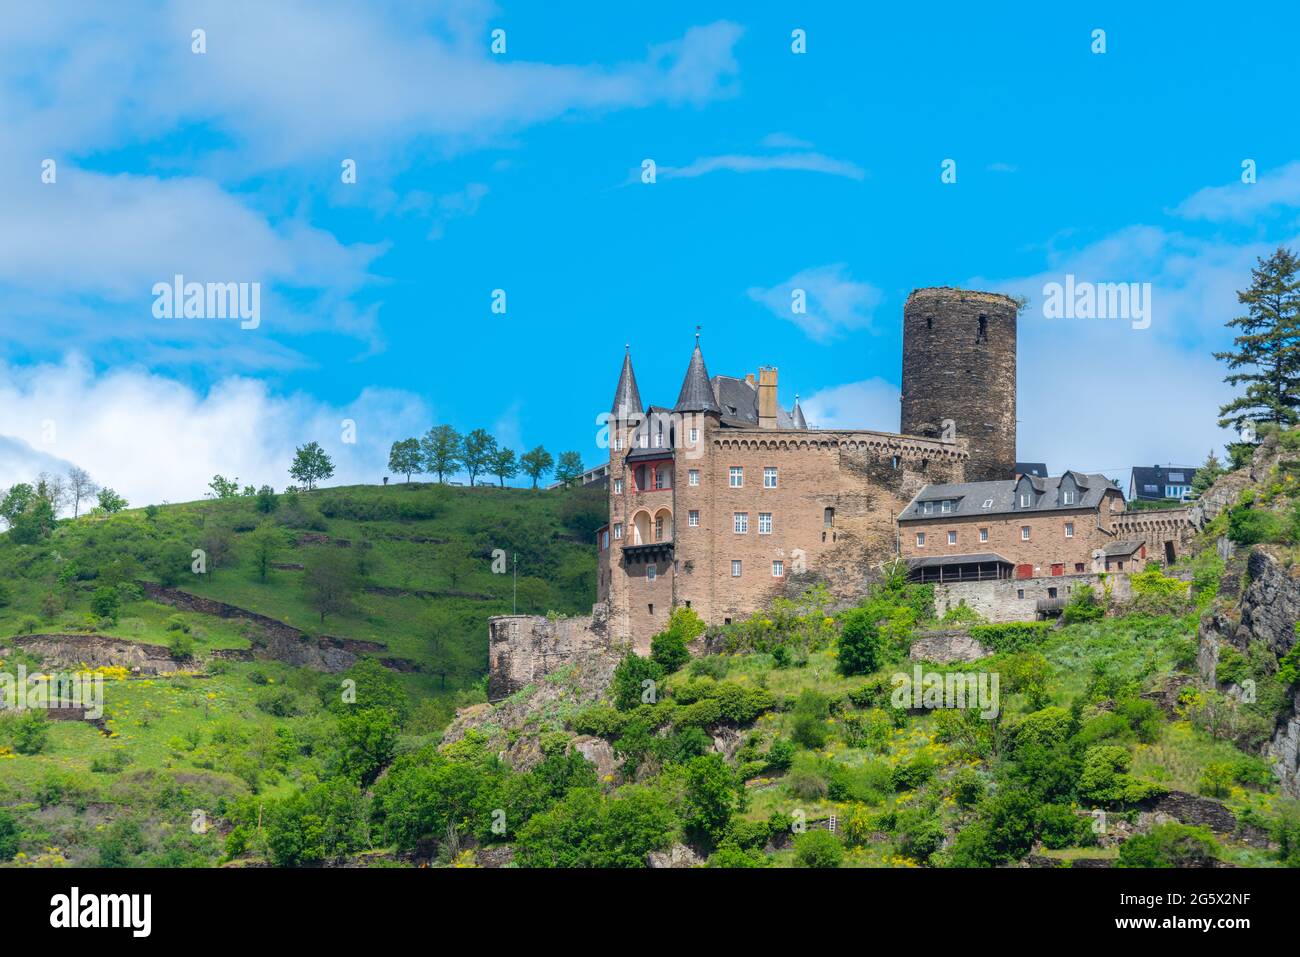 14th century Katz Castle, St. Goarshausen, Upper Middle Rhine Valley, UNESCO World Heritage Region, Rhineland-Palatinate, Germany Stock Photo